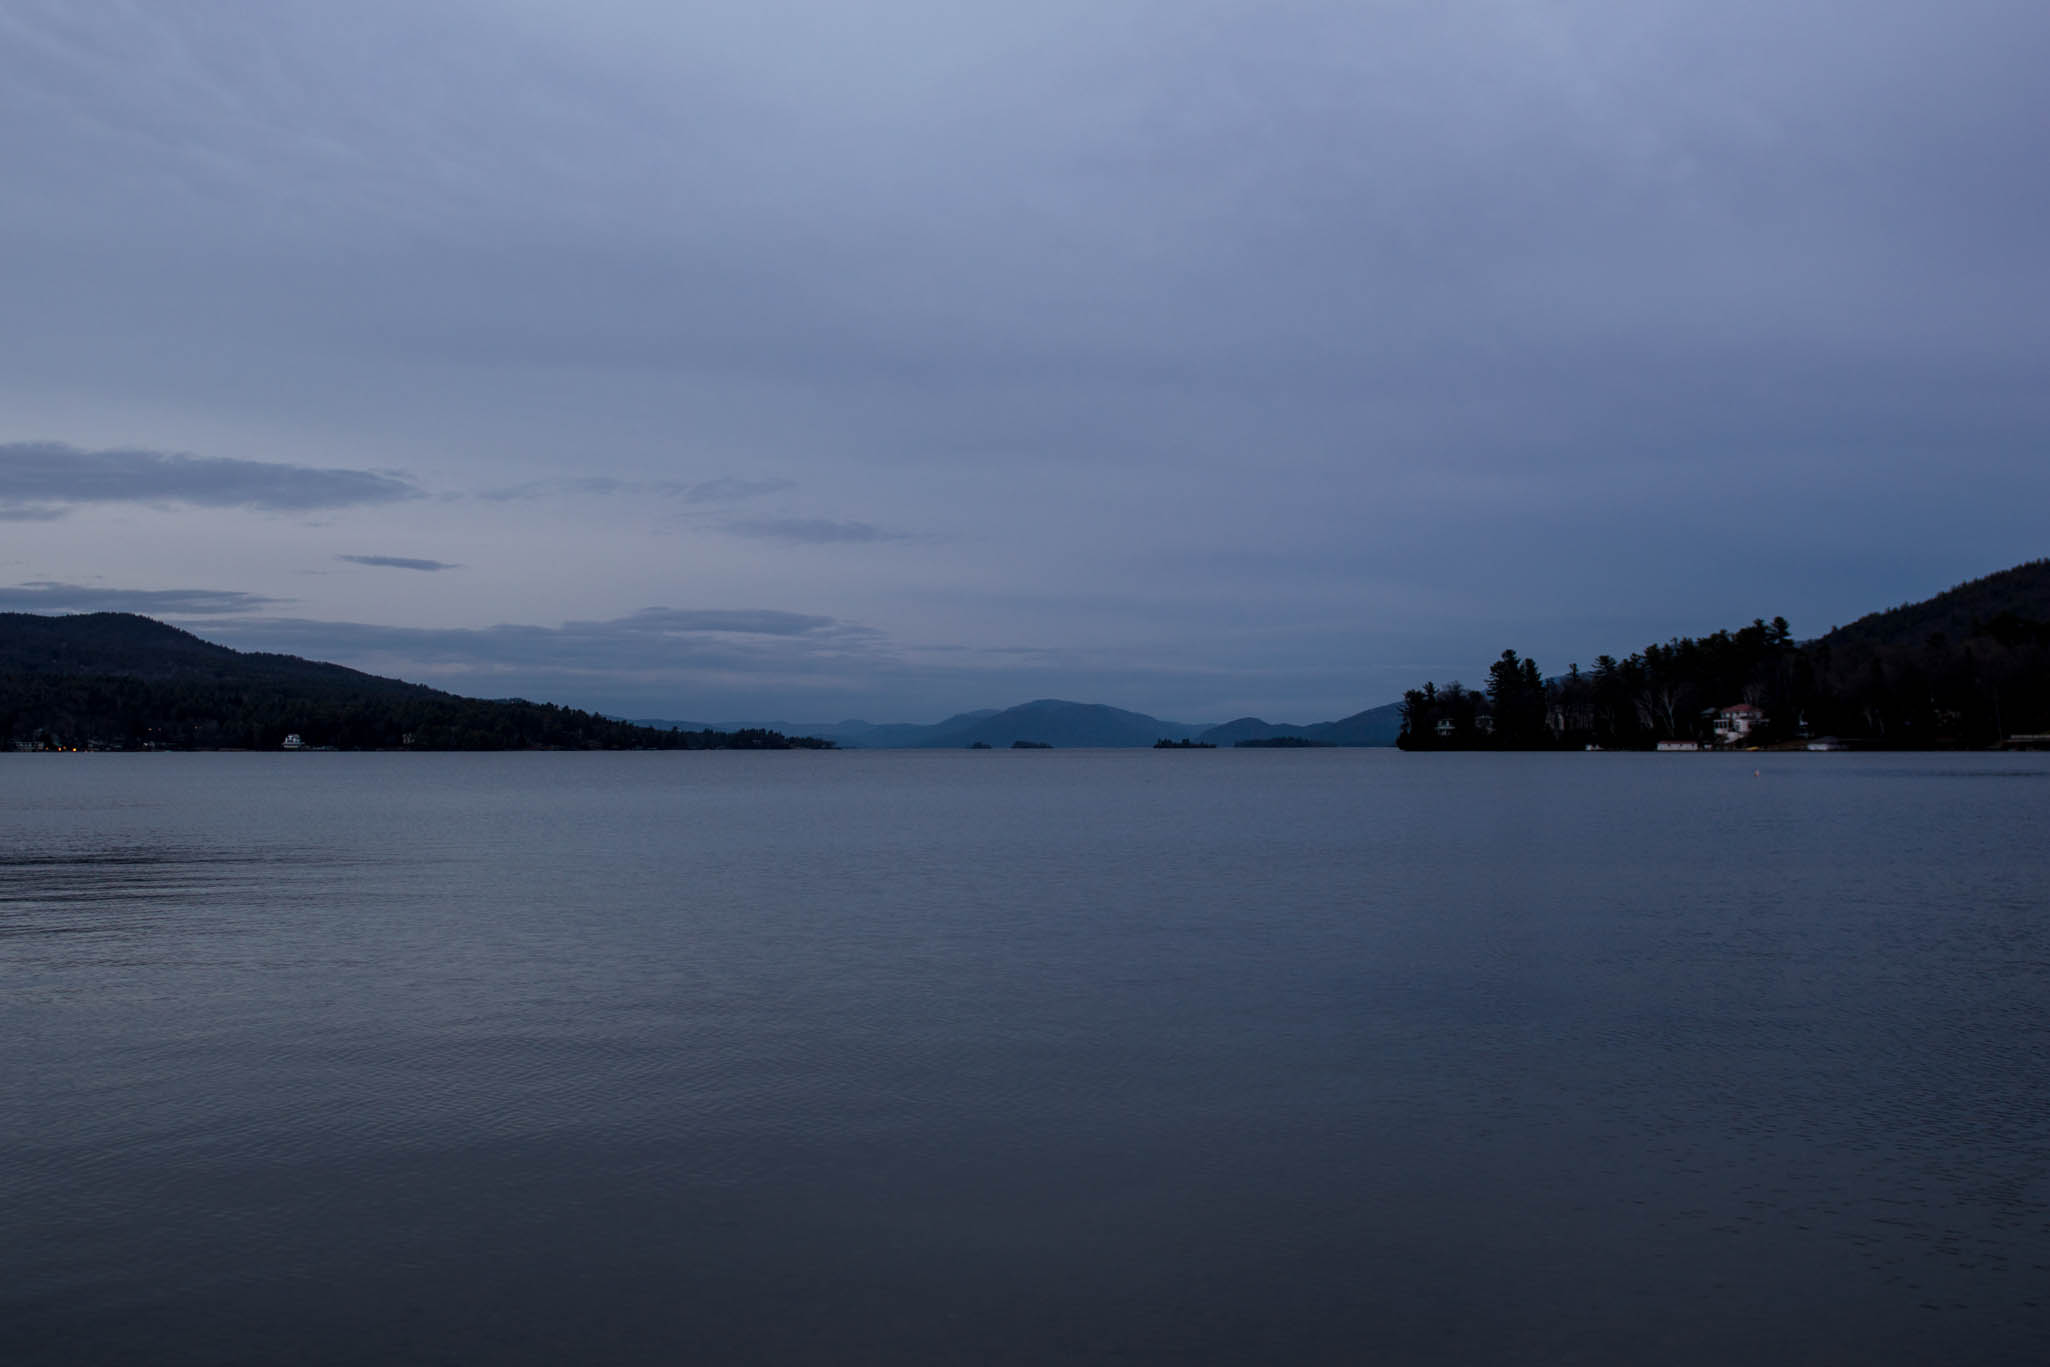 Lake George, New York at dusk